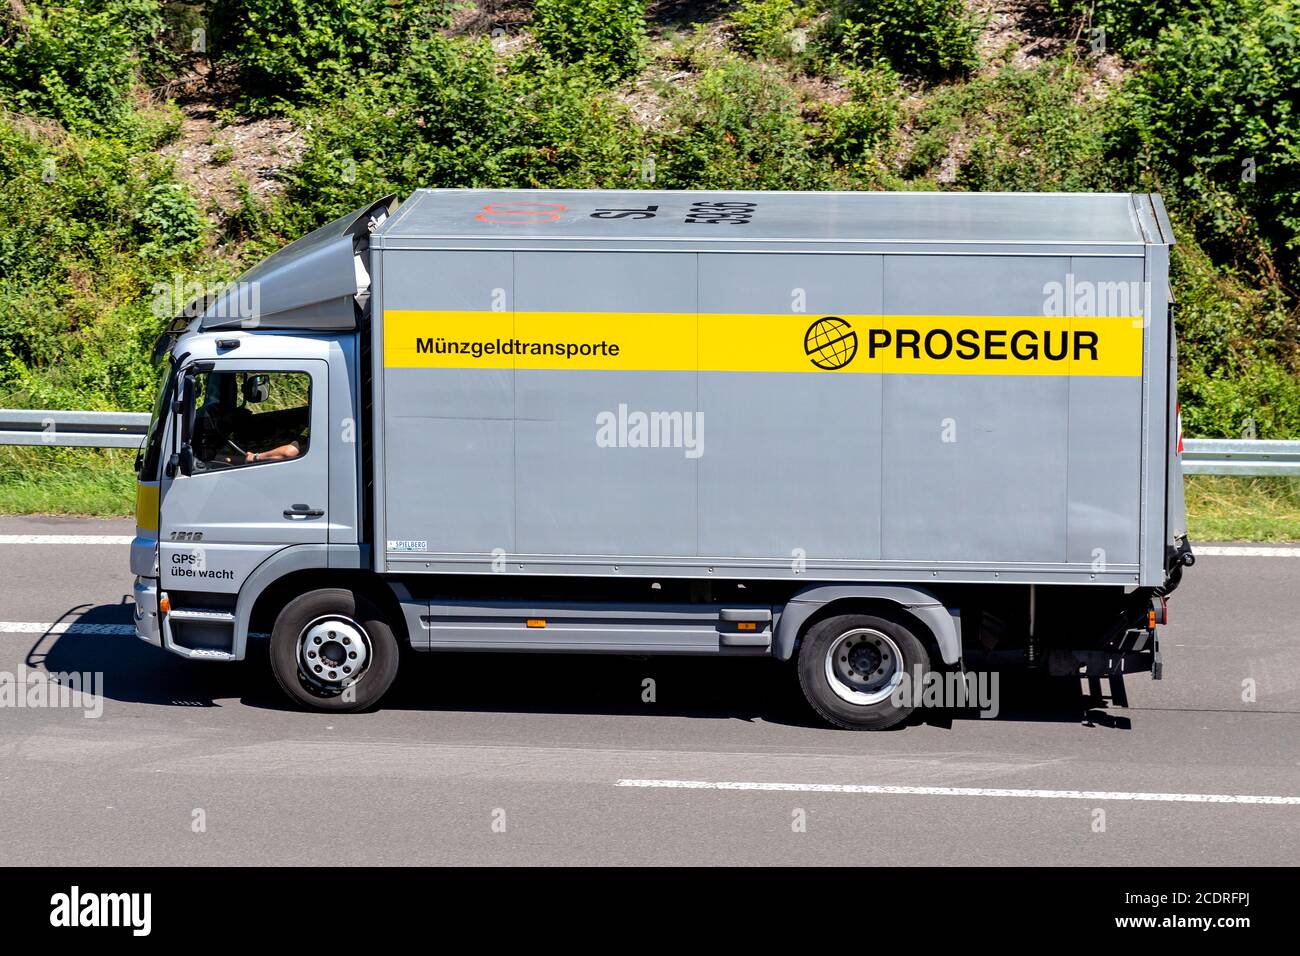 Prosegur Mercedes-Benz Atego coinage transporter on motorway. Stock Photo